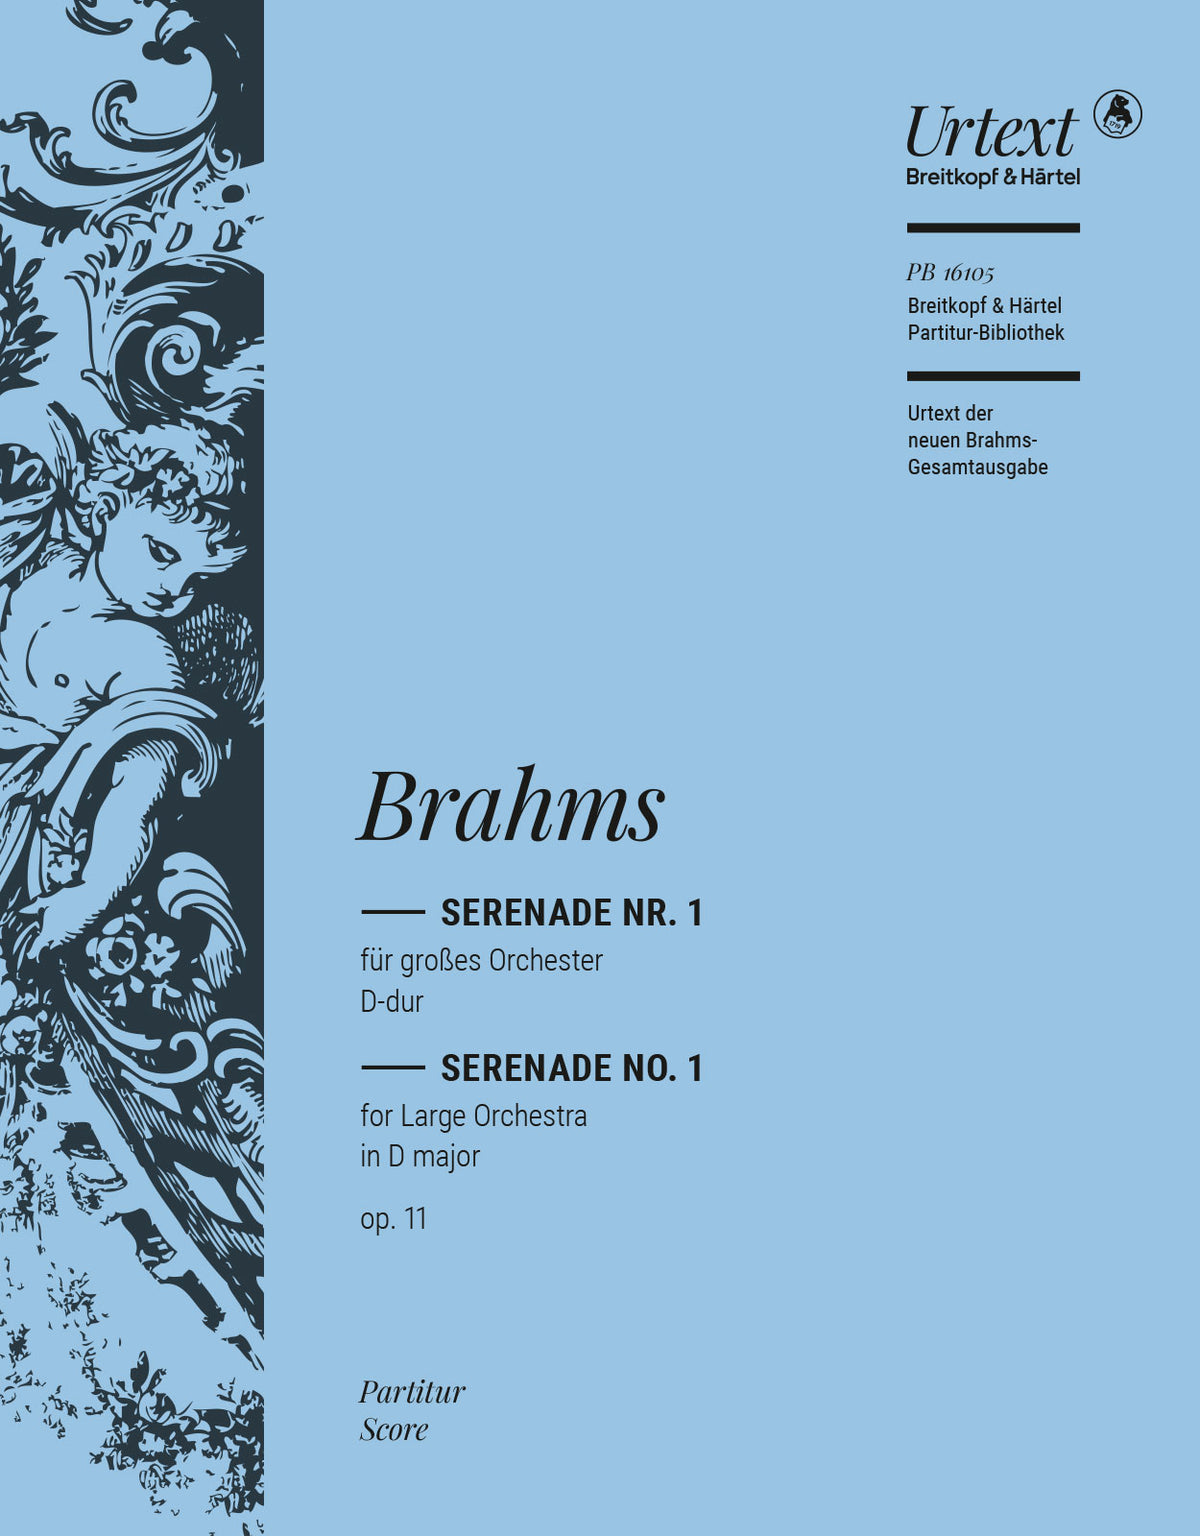 Brahms Serenade No 1 in D major Opus 11